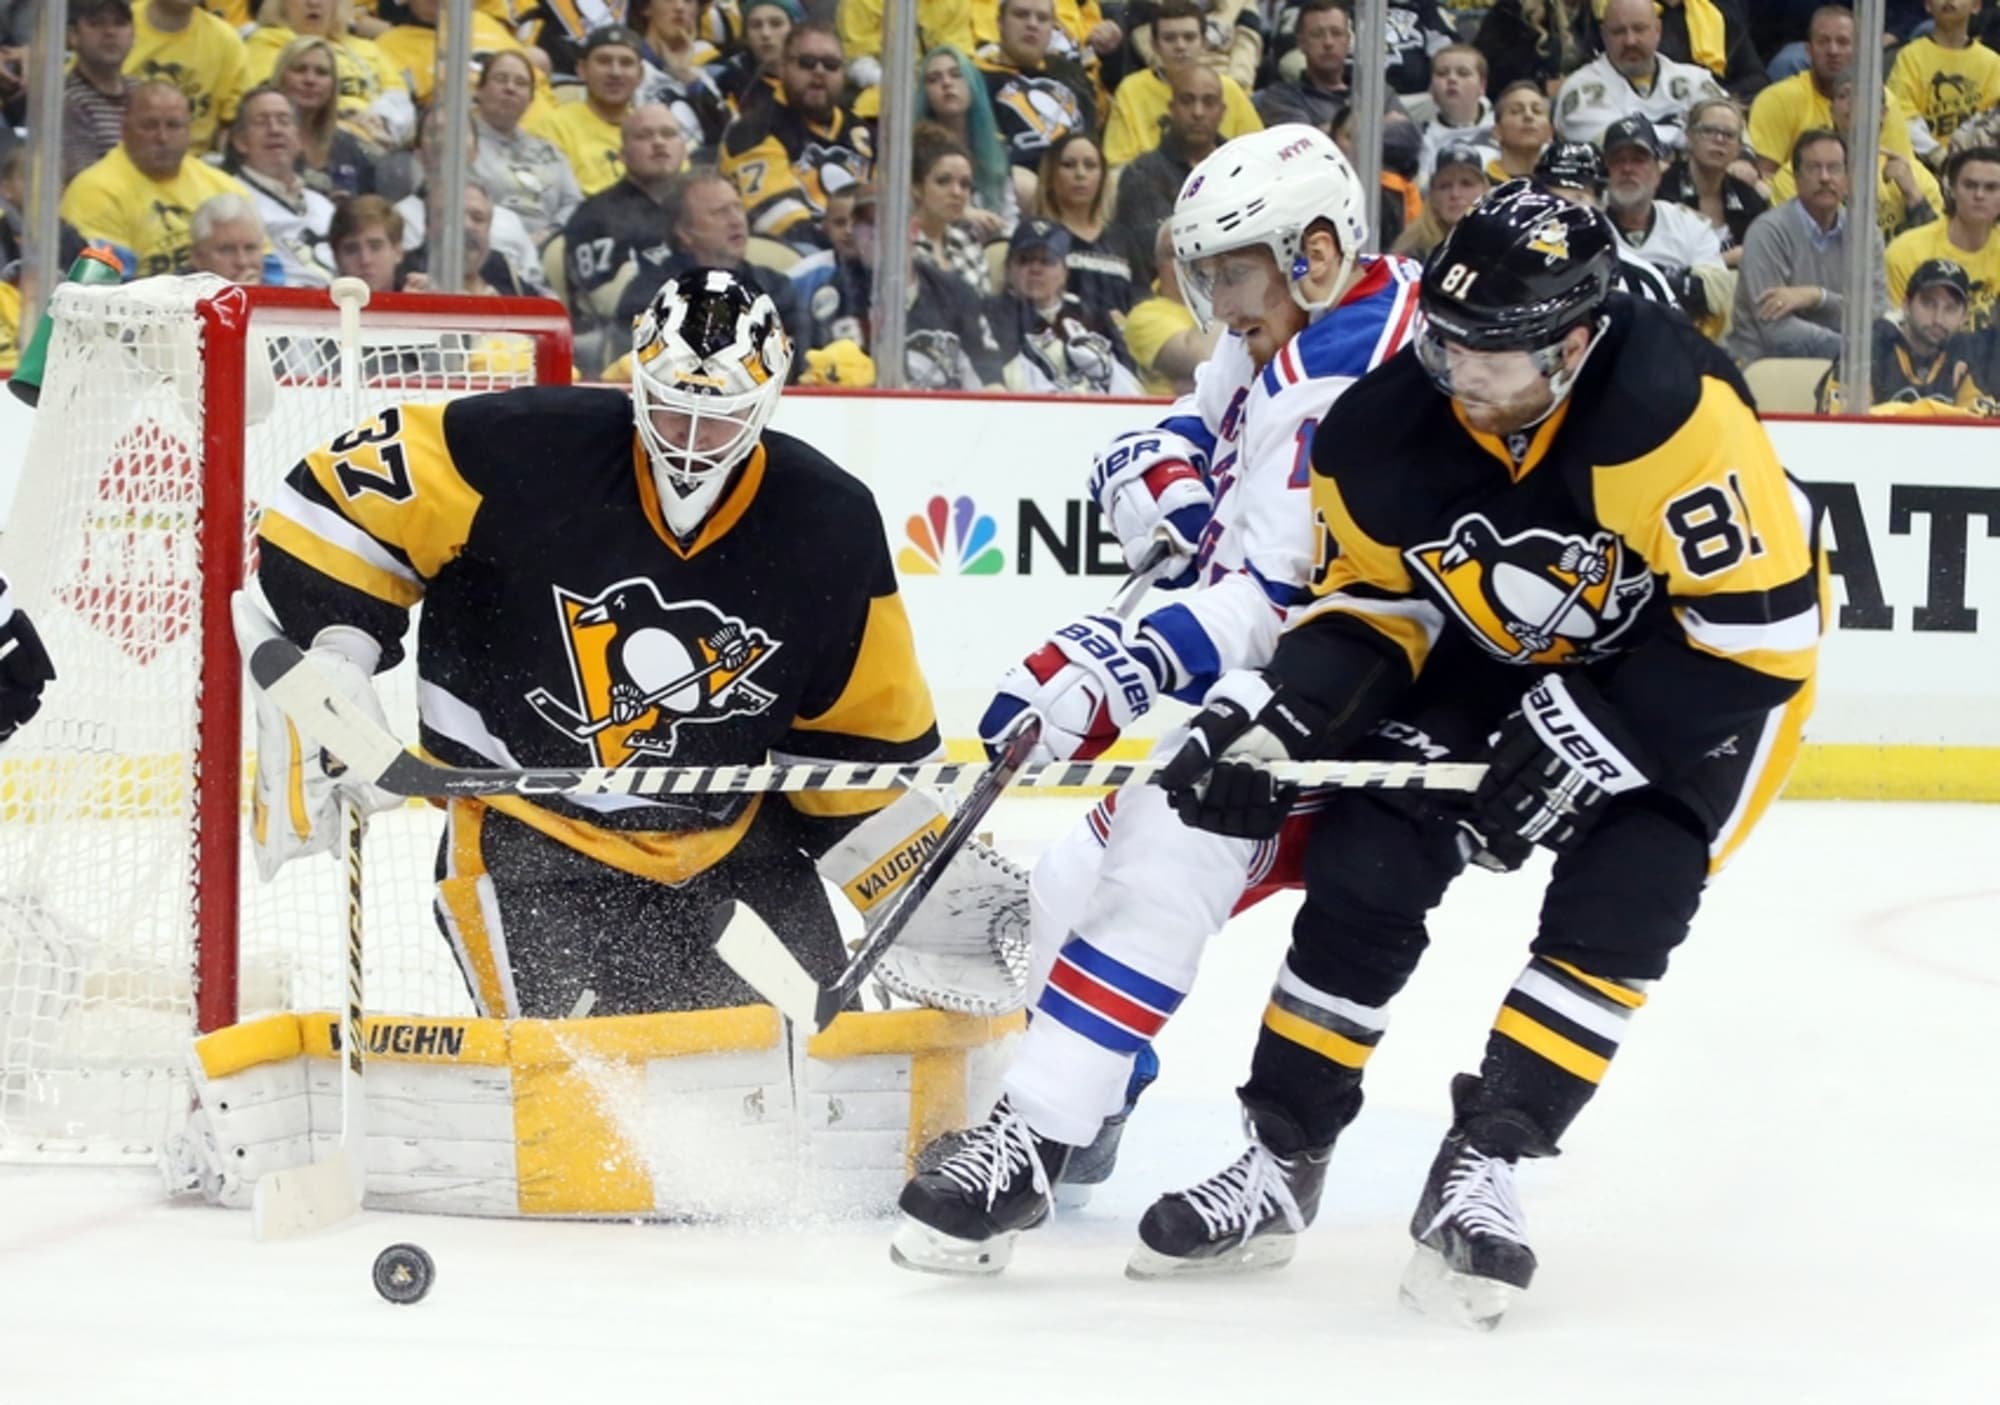 Rangers vs. Penguins Full highlights, final score and more